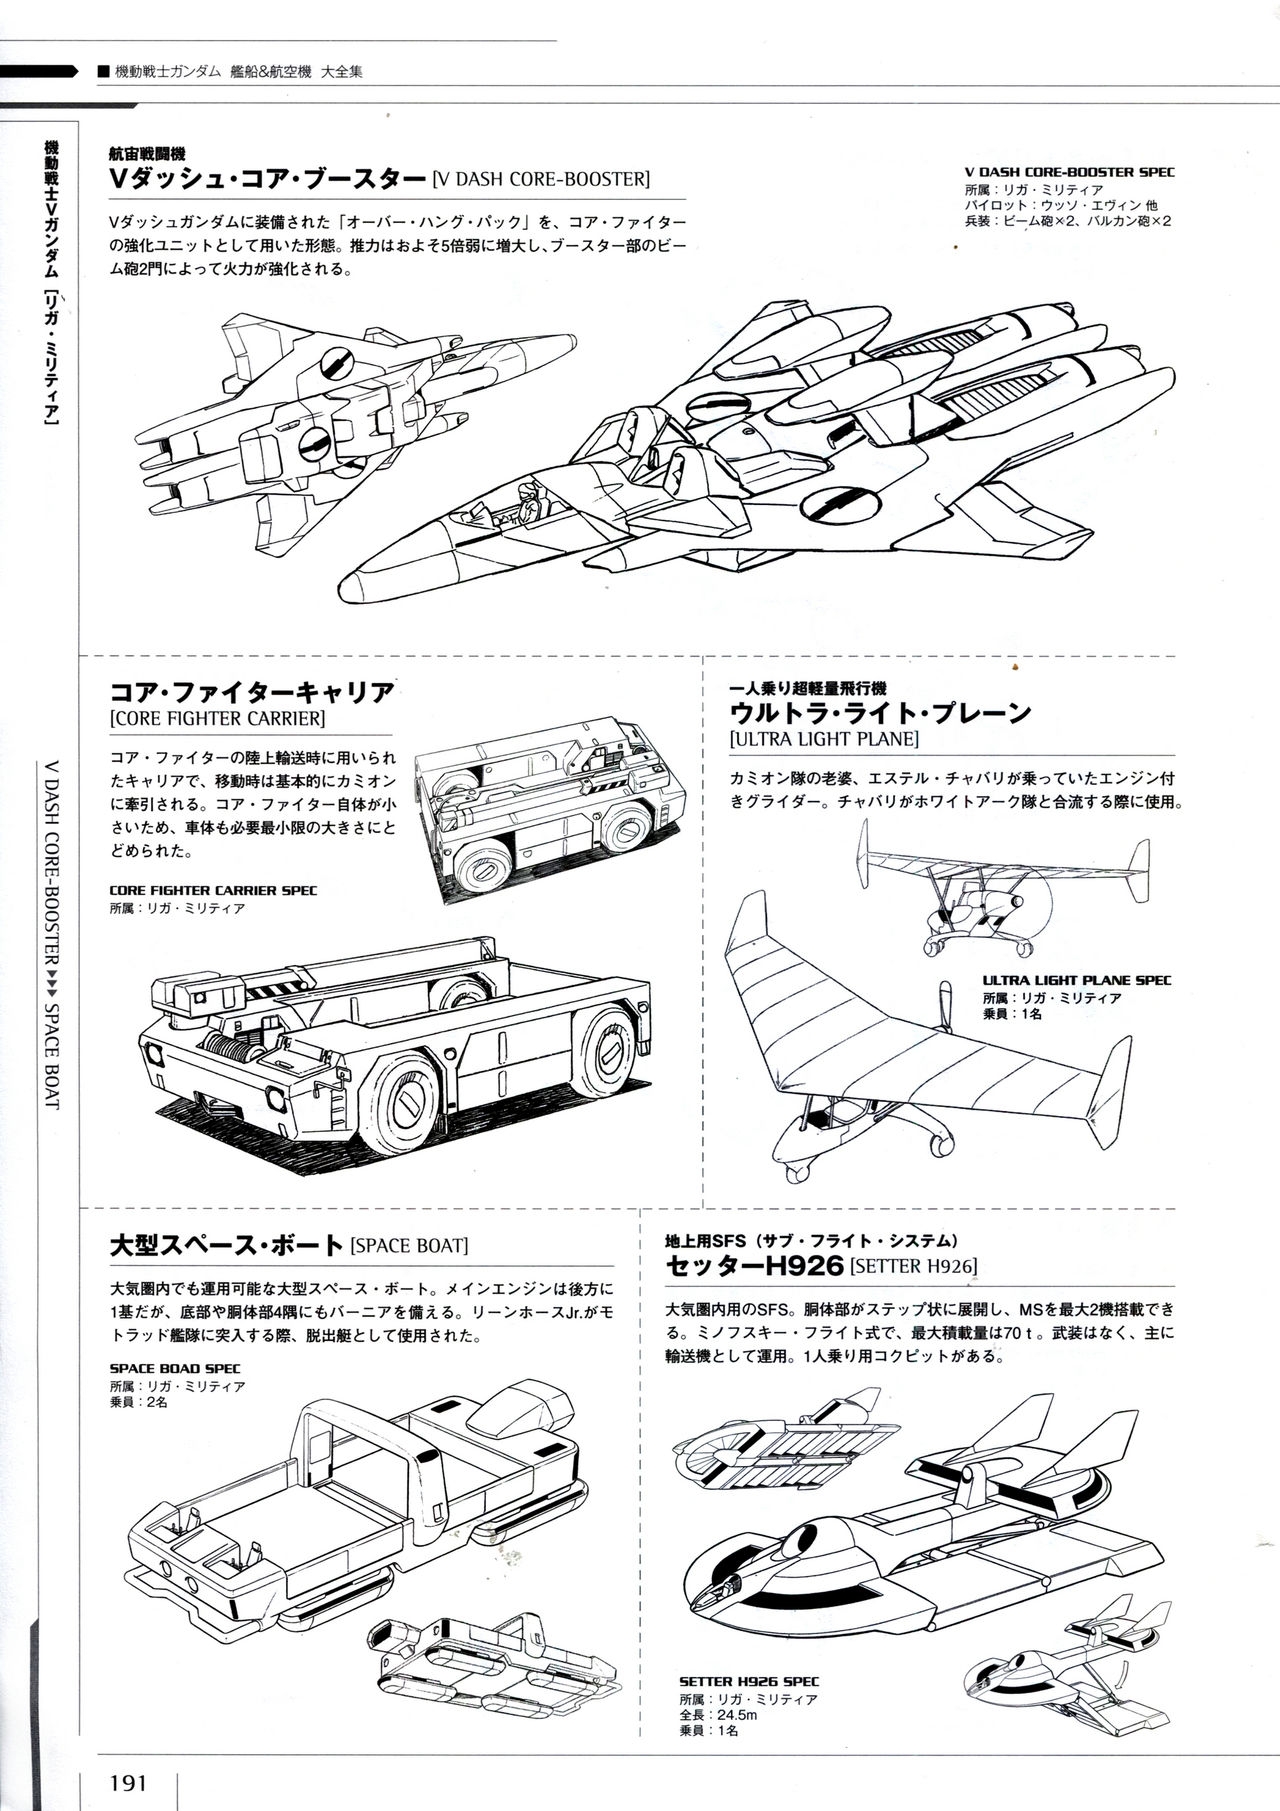 Mobile Suit Gundam - Ship & Aerospace Plane Encyclopedia - Revised Edition 196